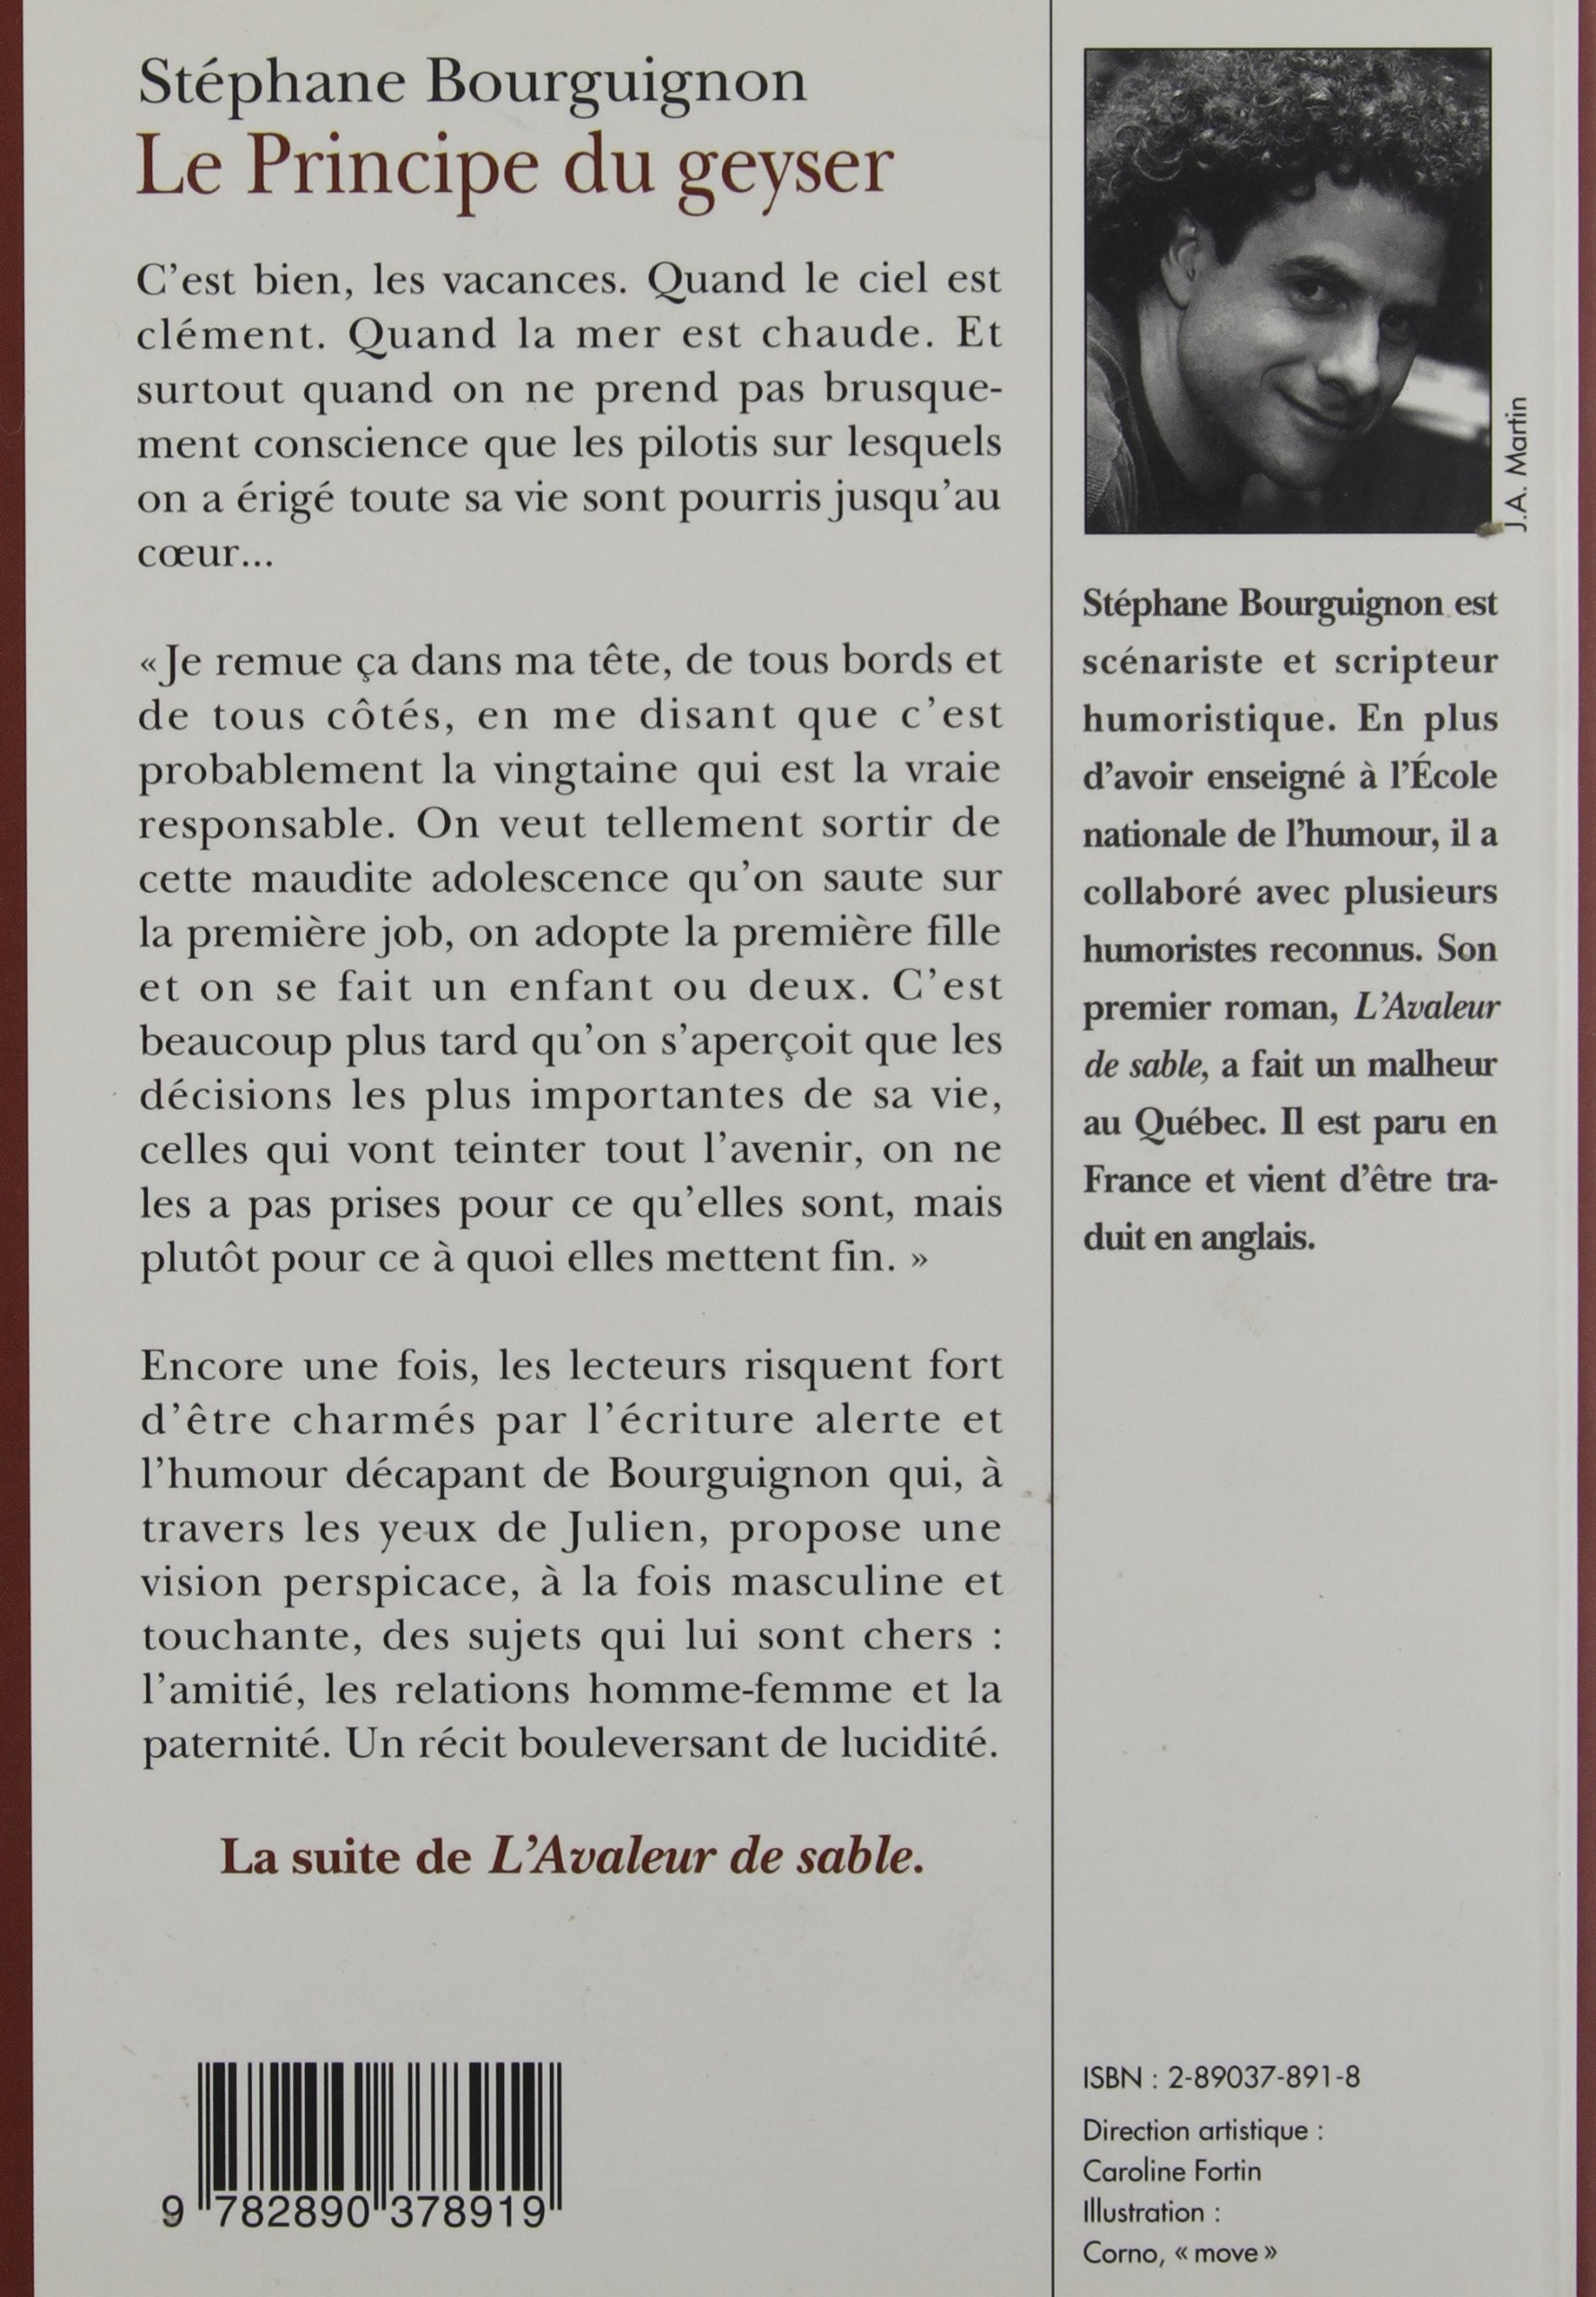 Le principe du geyser (Stéphane Bourguignon)